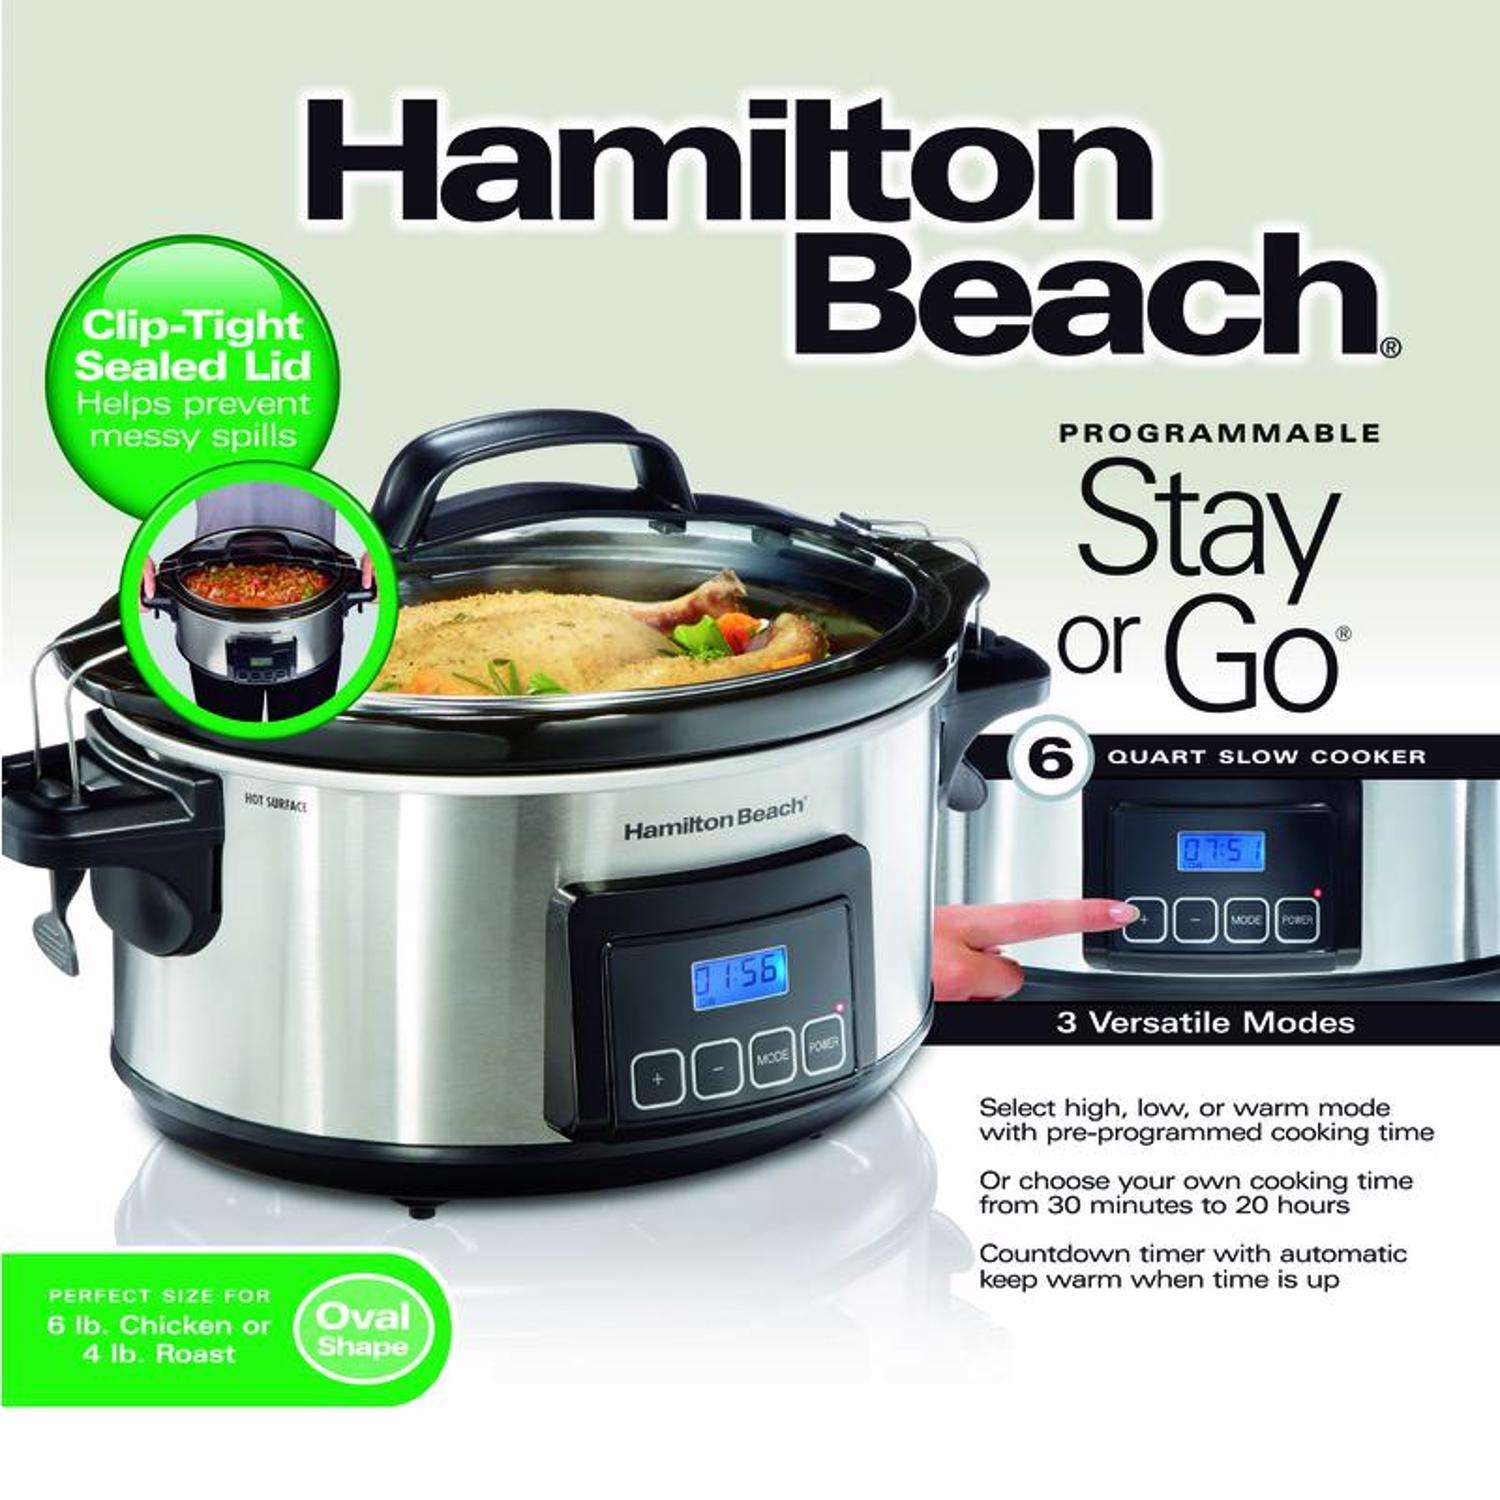 Hamilton Beach - Stay or Go 6 Quart Slow Cooker - Black